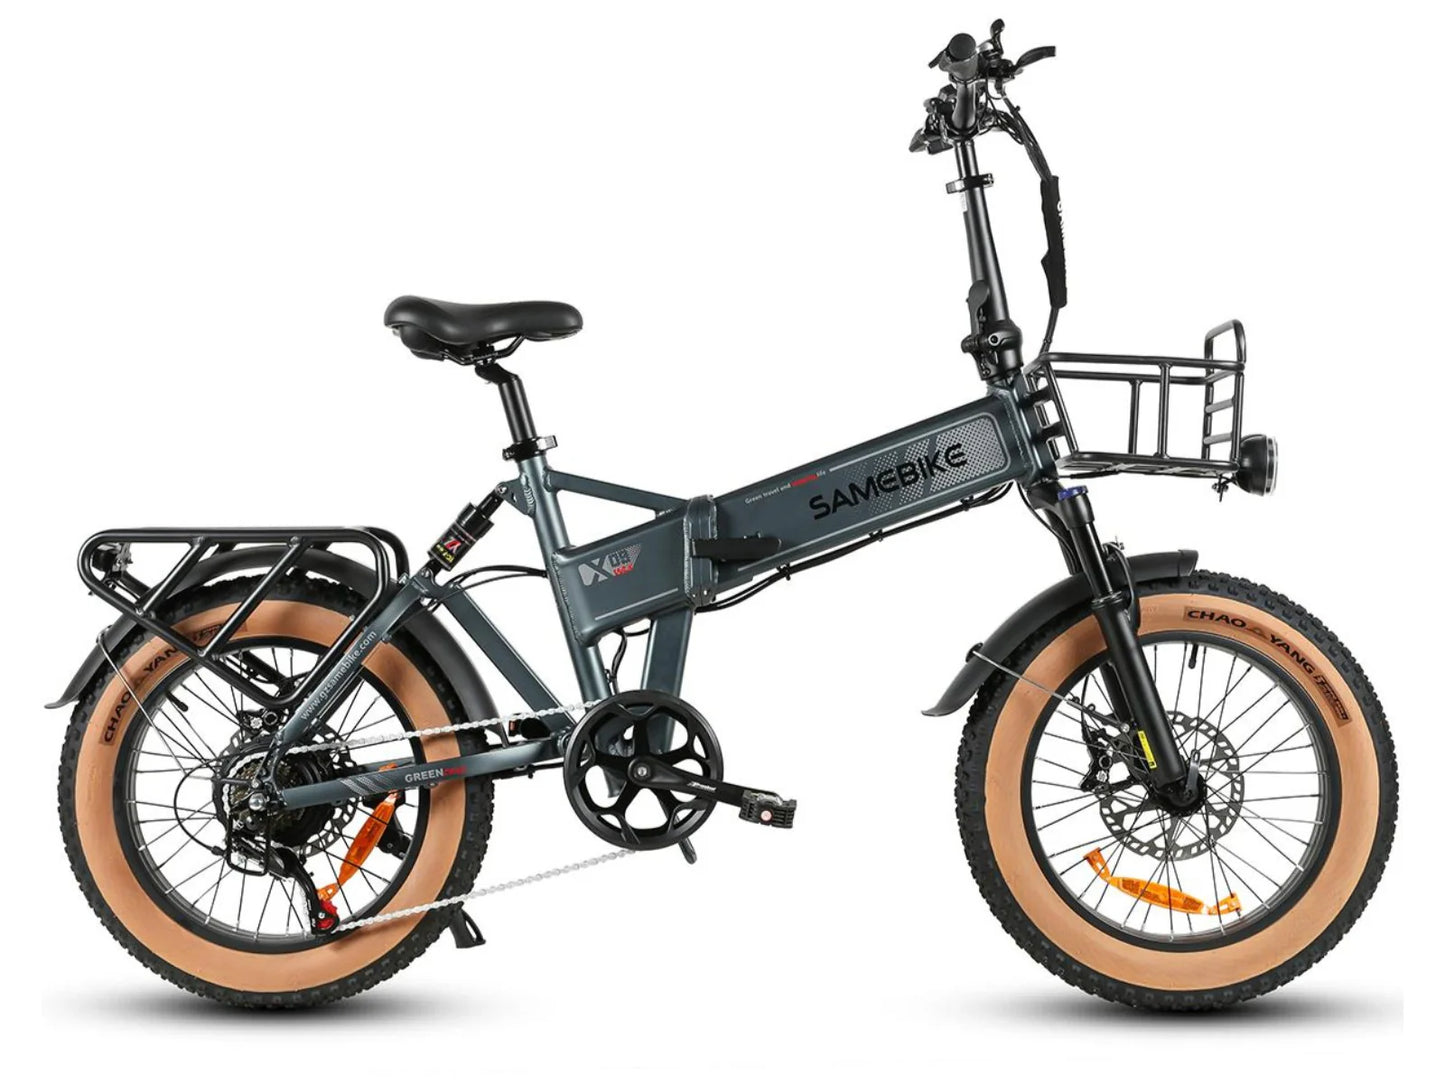 SAMEBIKE XWXL09 750W Folding Electric City Bike 20 * 4.0 pouces Fat Tire 48V 10AH Batterie 80km Kilométrage maximum